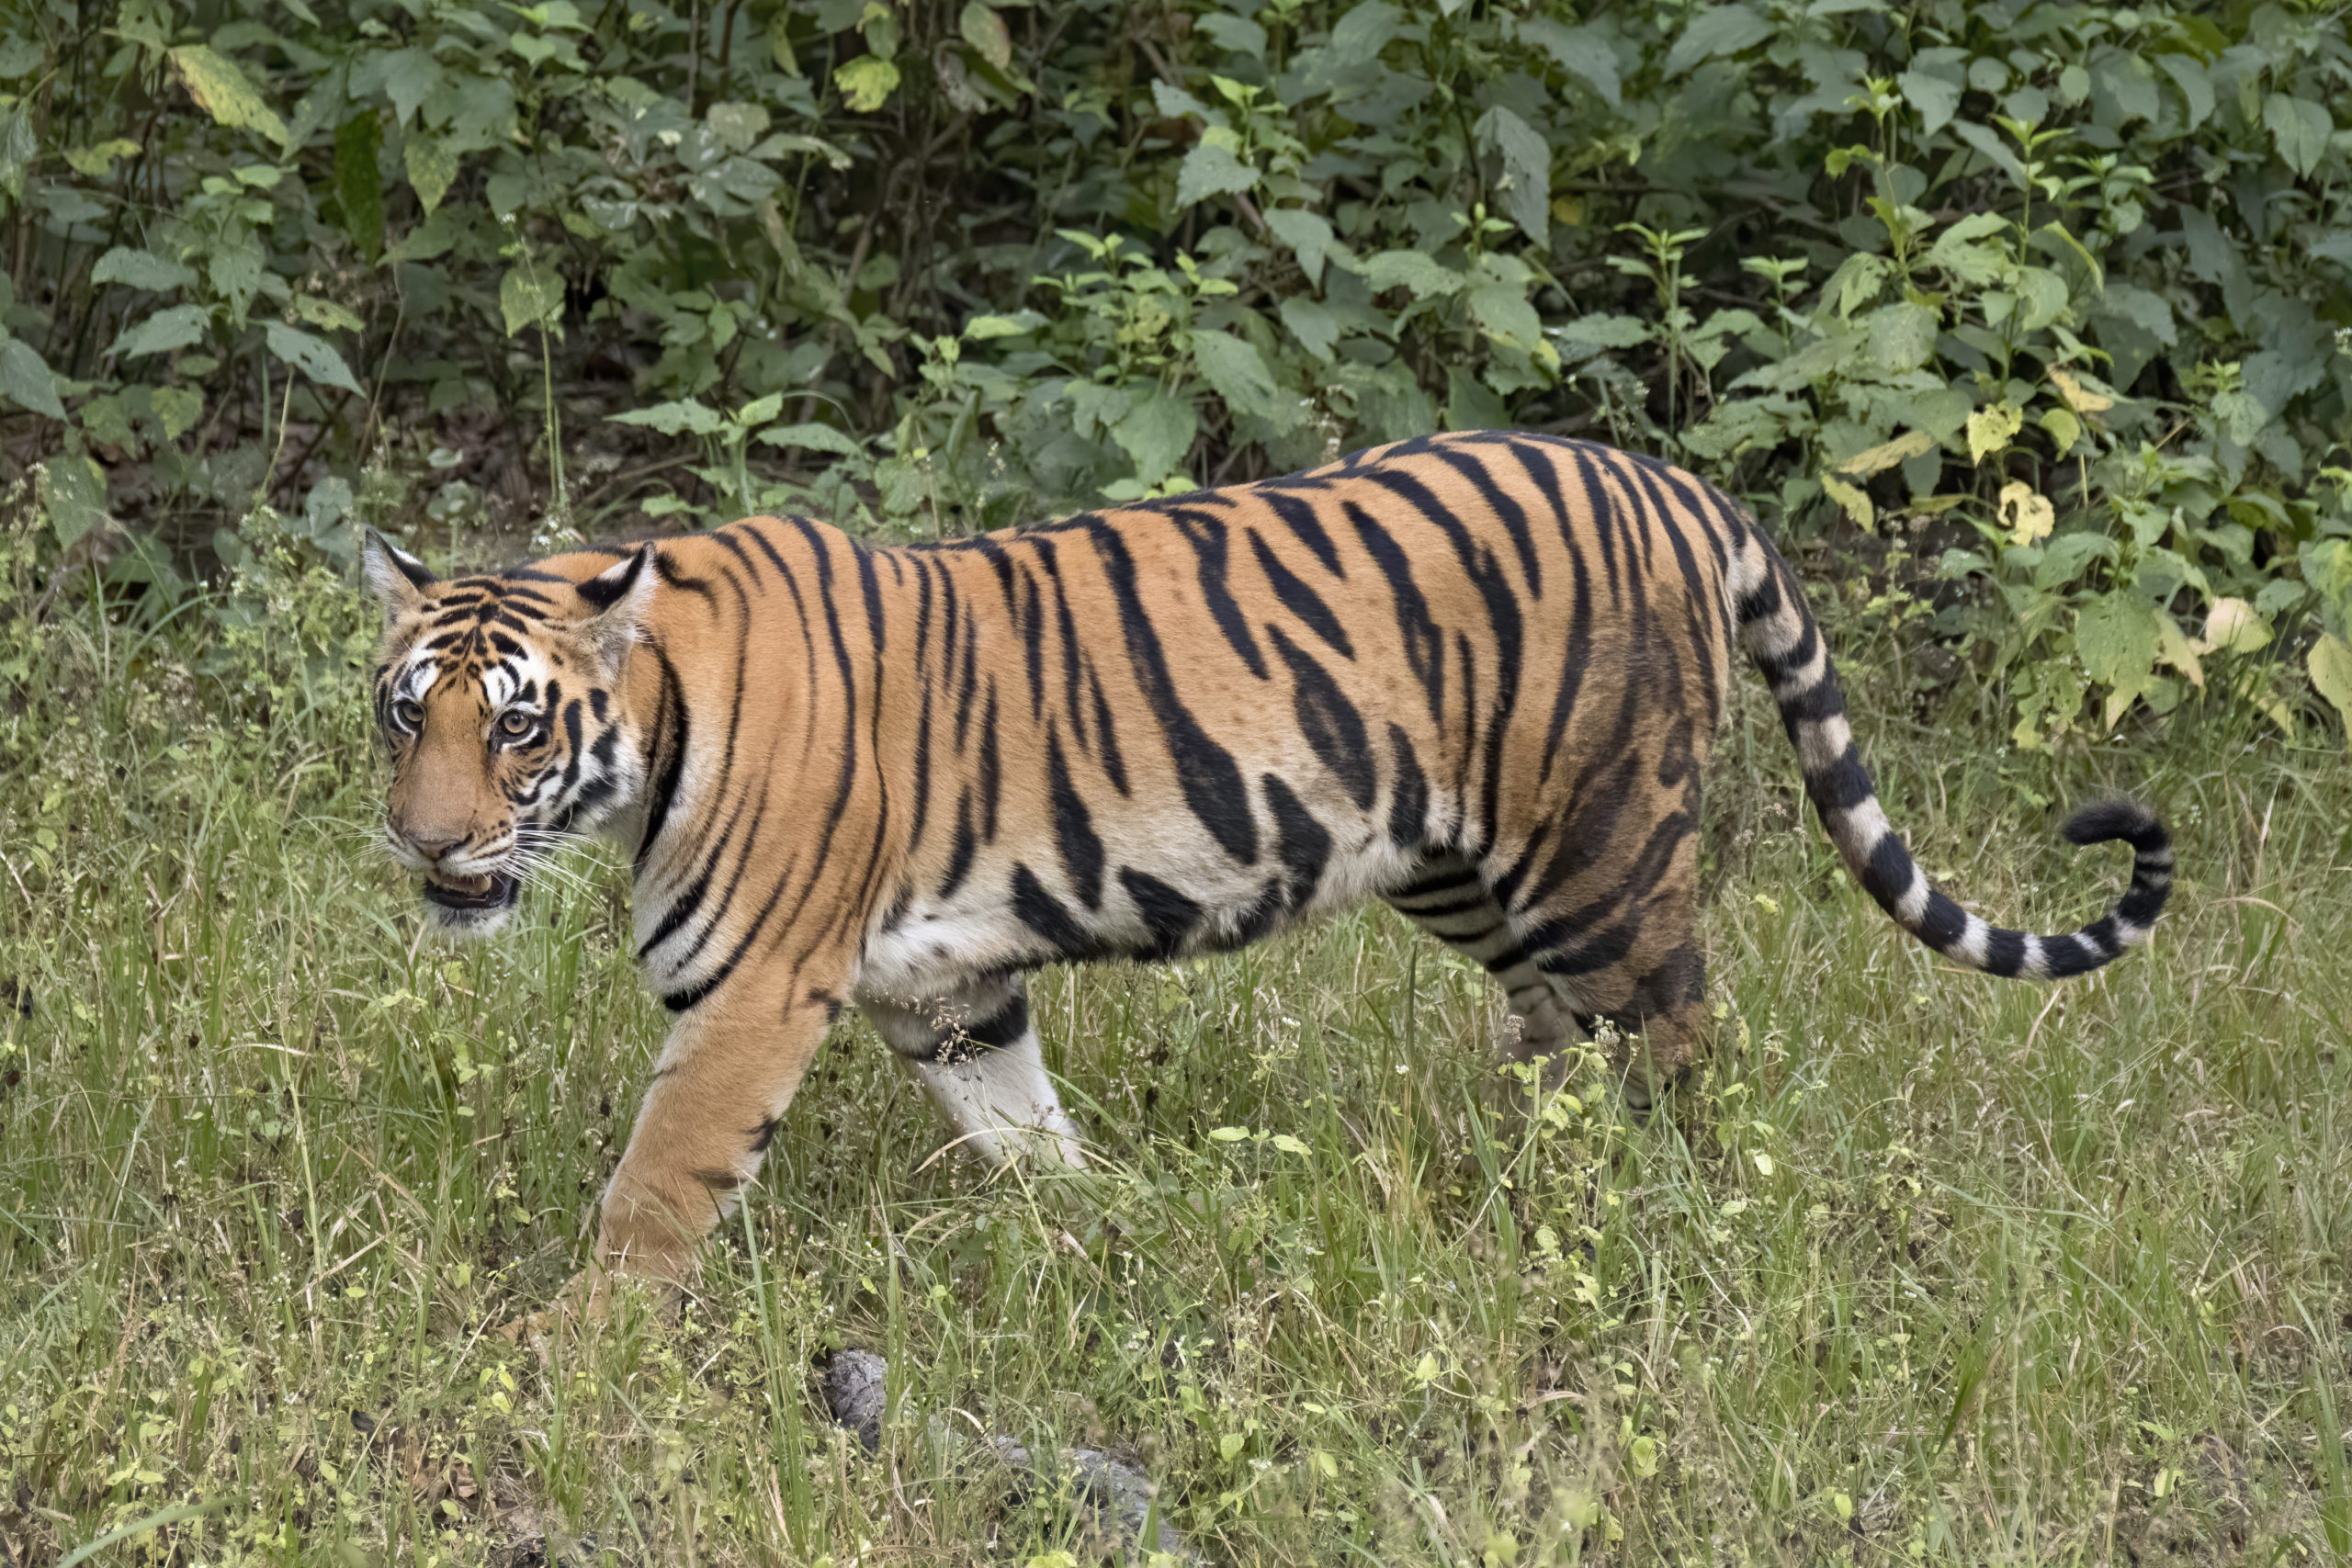 Elderly killed in a tiger attack in Chitwan